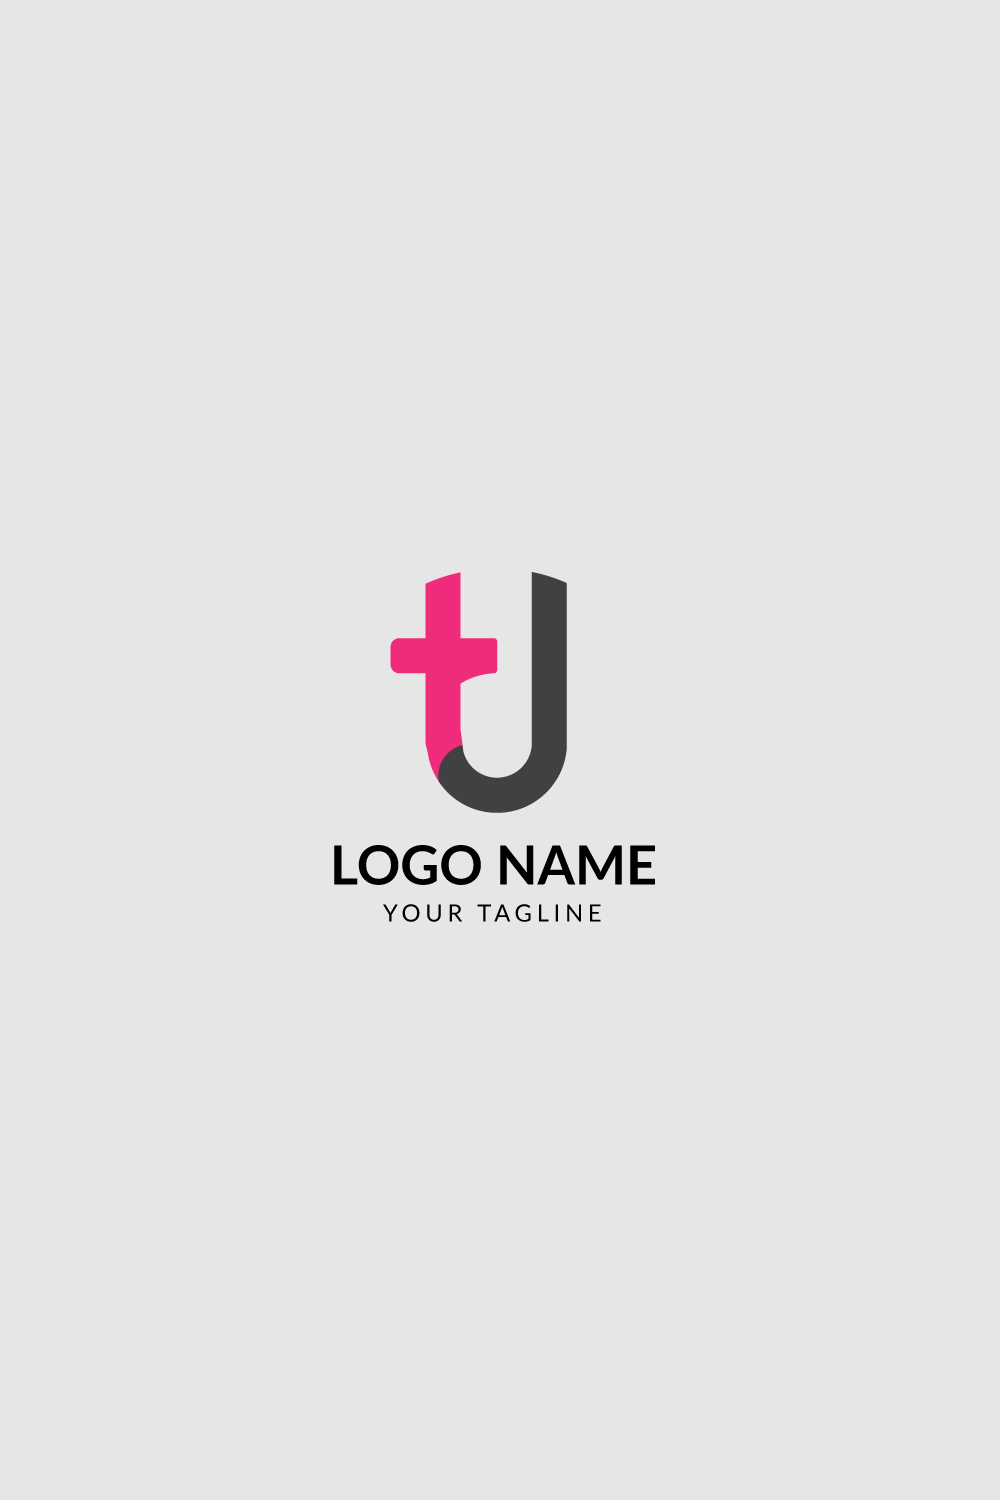 T letter logo design pinterest preview image.